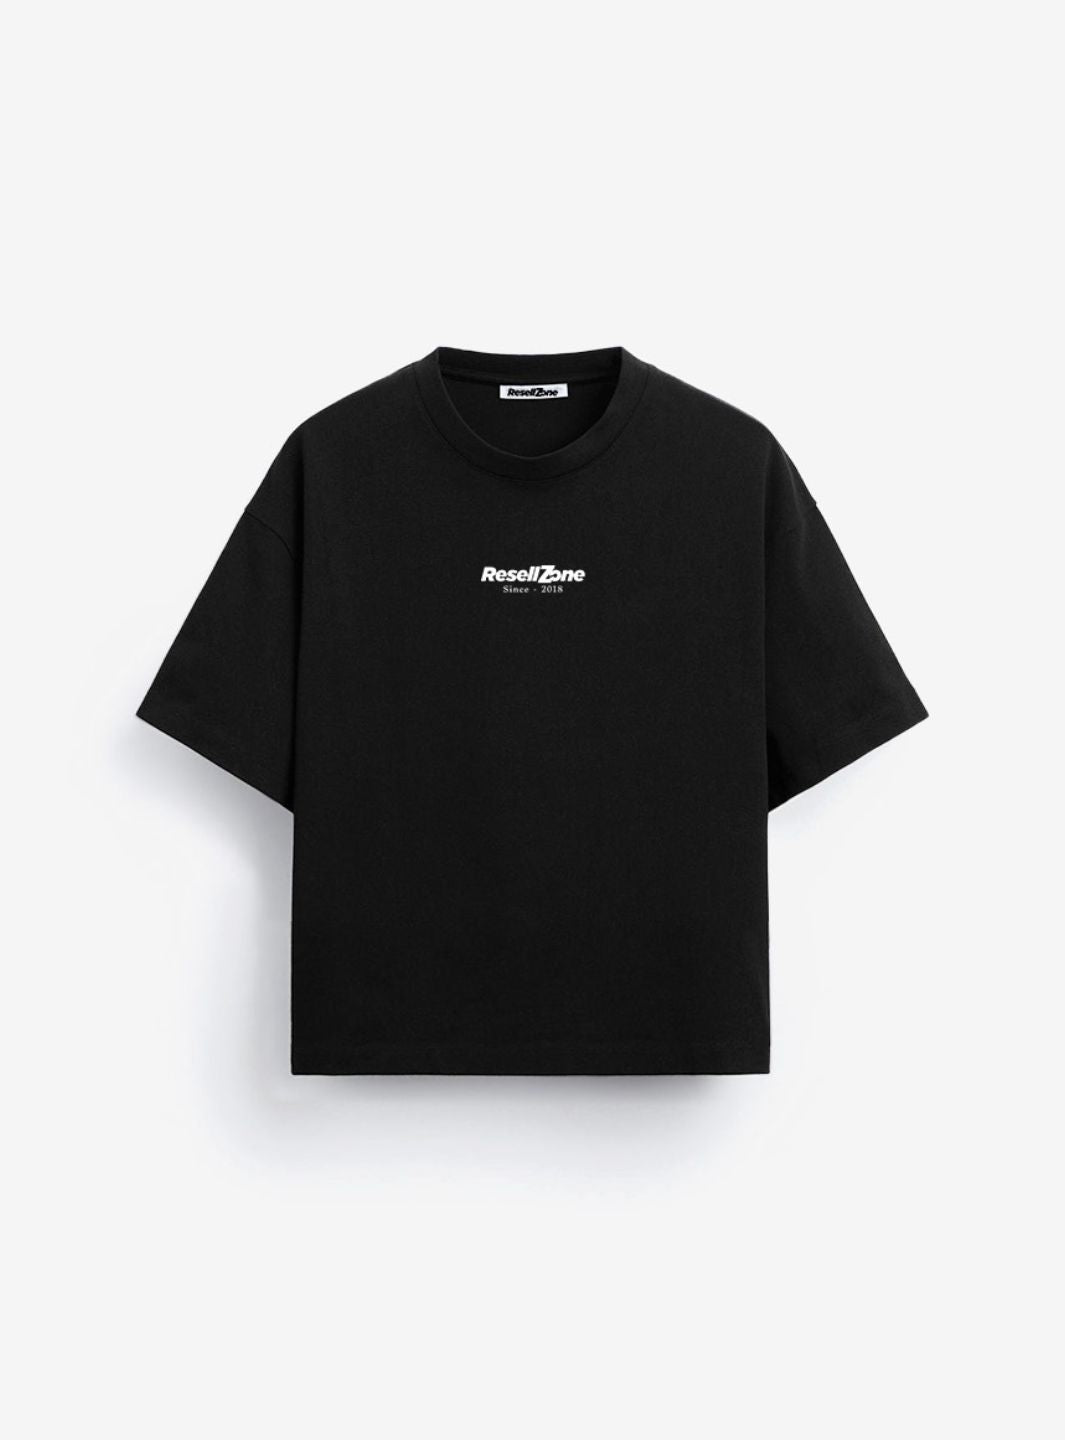 8 Ball Pool T-Shirt Black | ResellZone